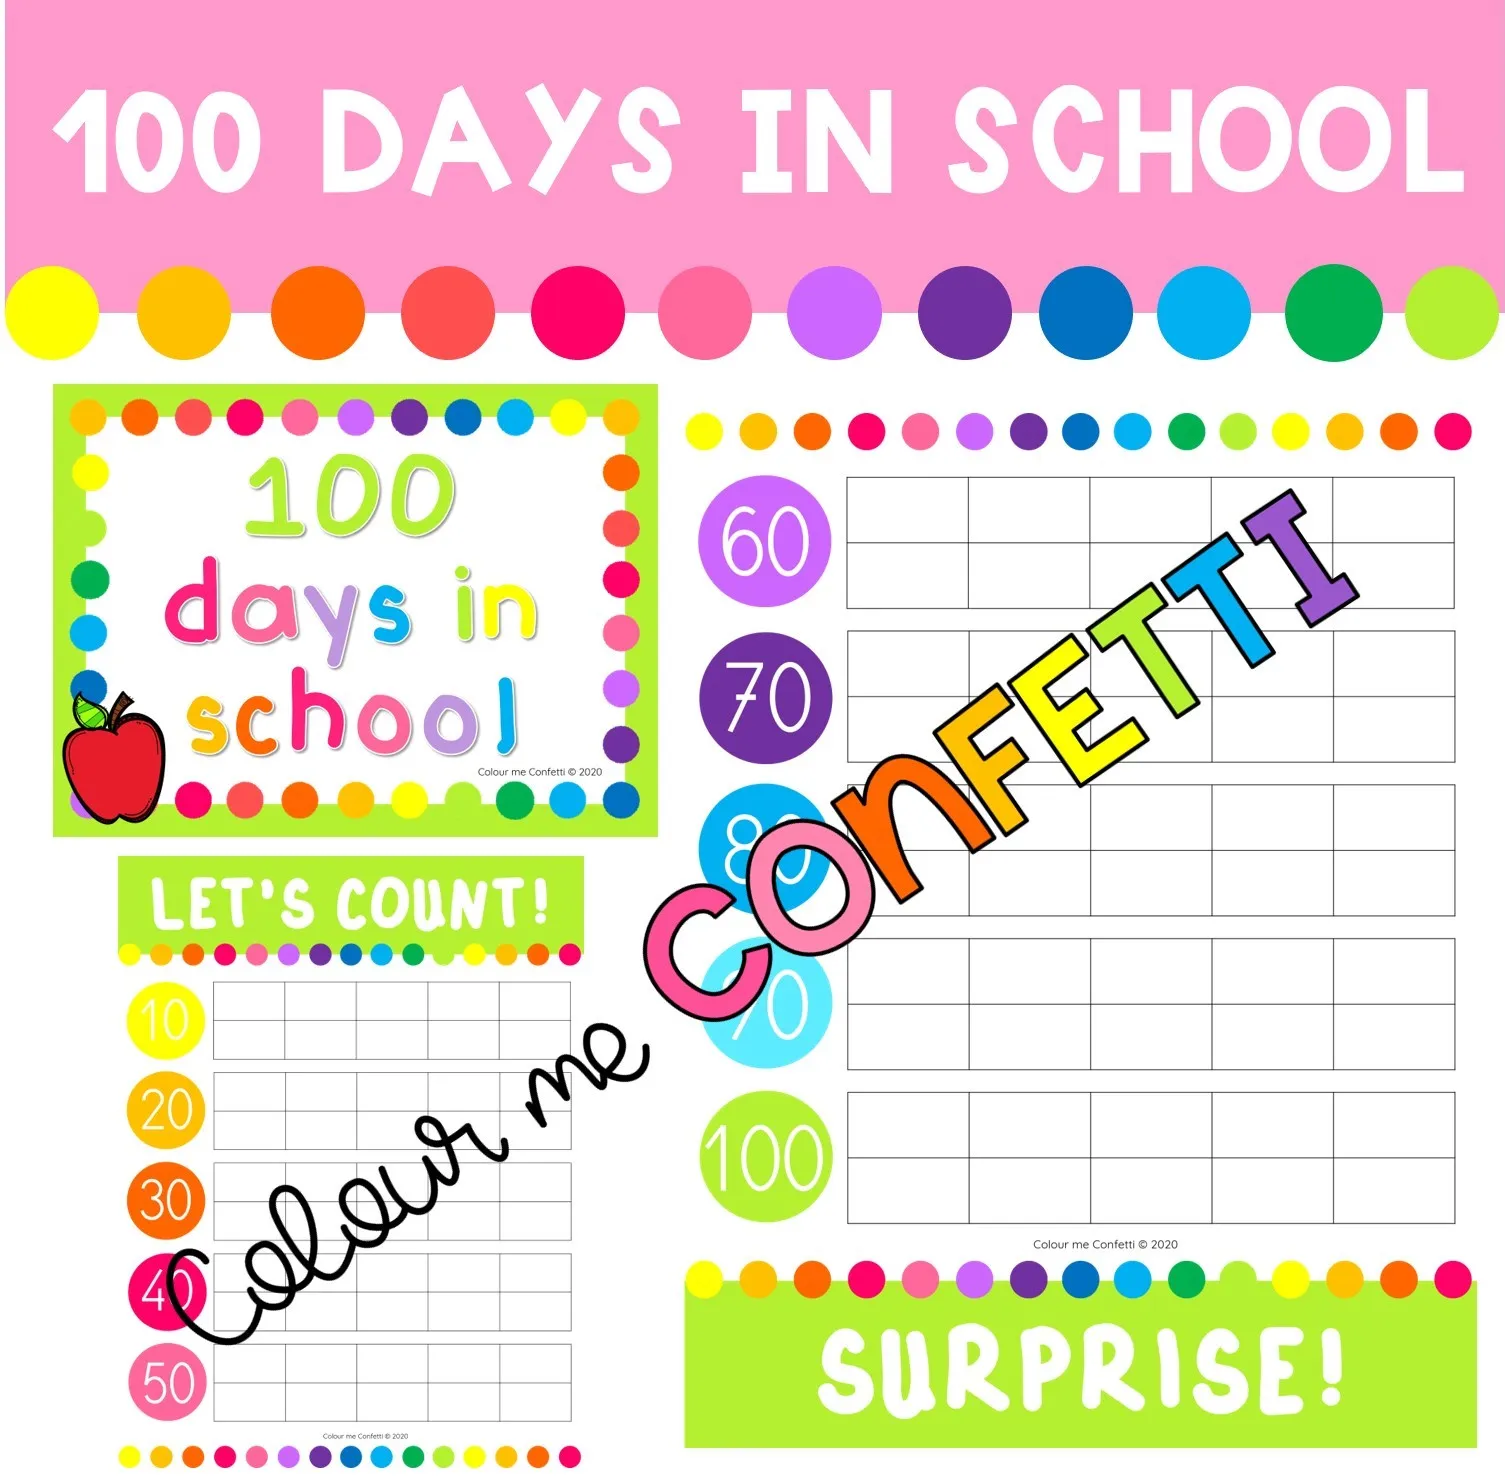 100 Days in School - Display